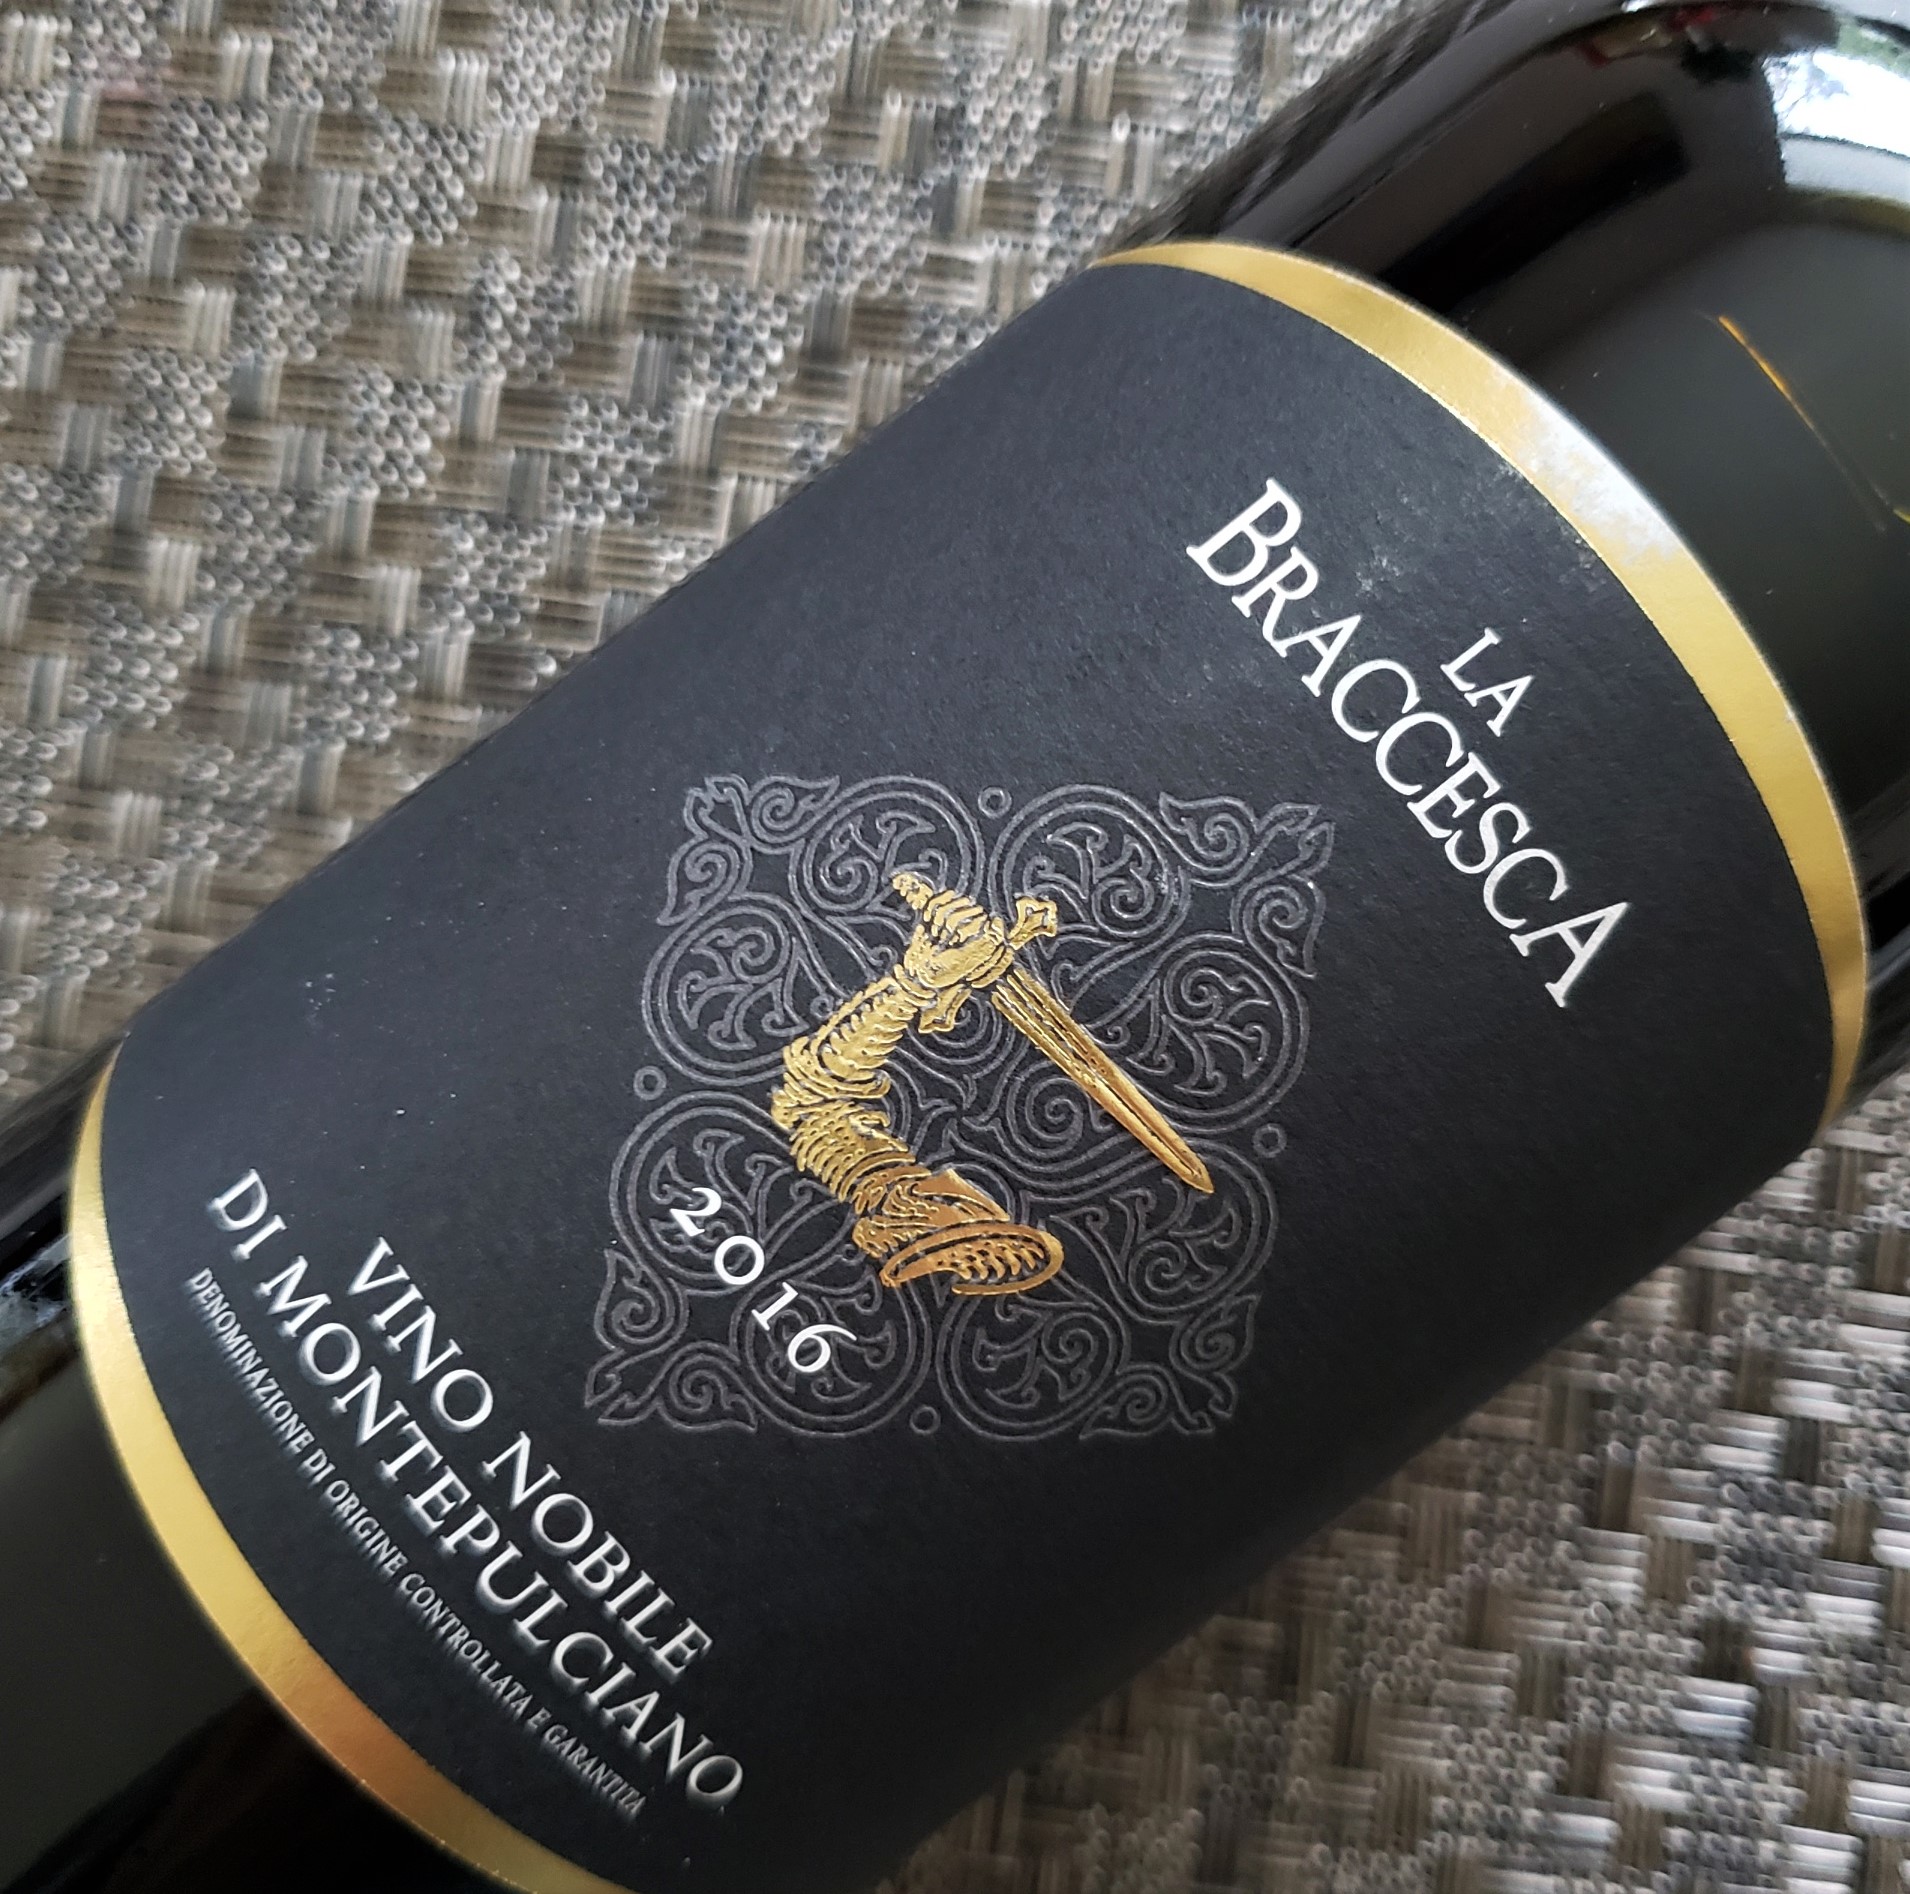 2016 Vino Nobile di Montepulciano DOCG from the La Braccesca winery in southern Tuscany.